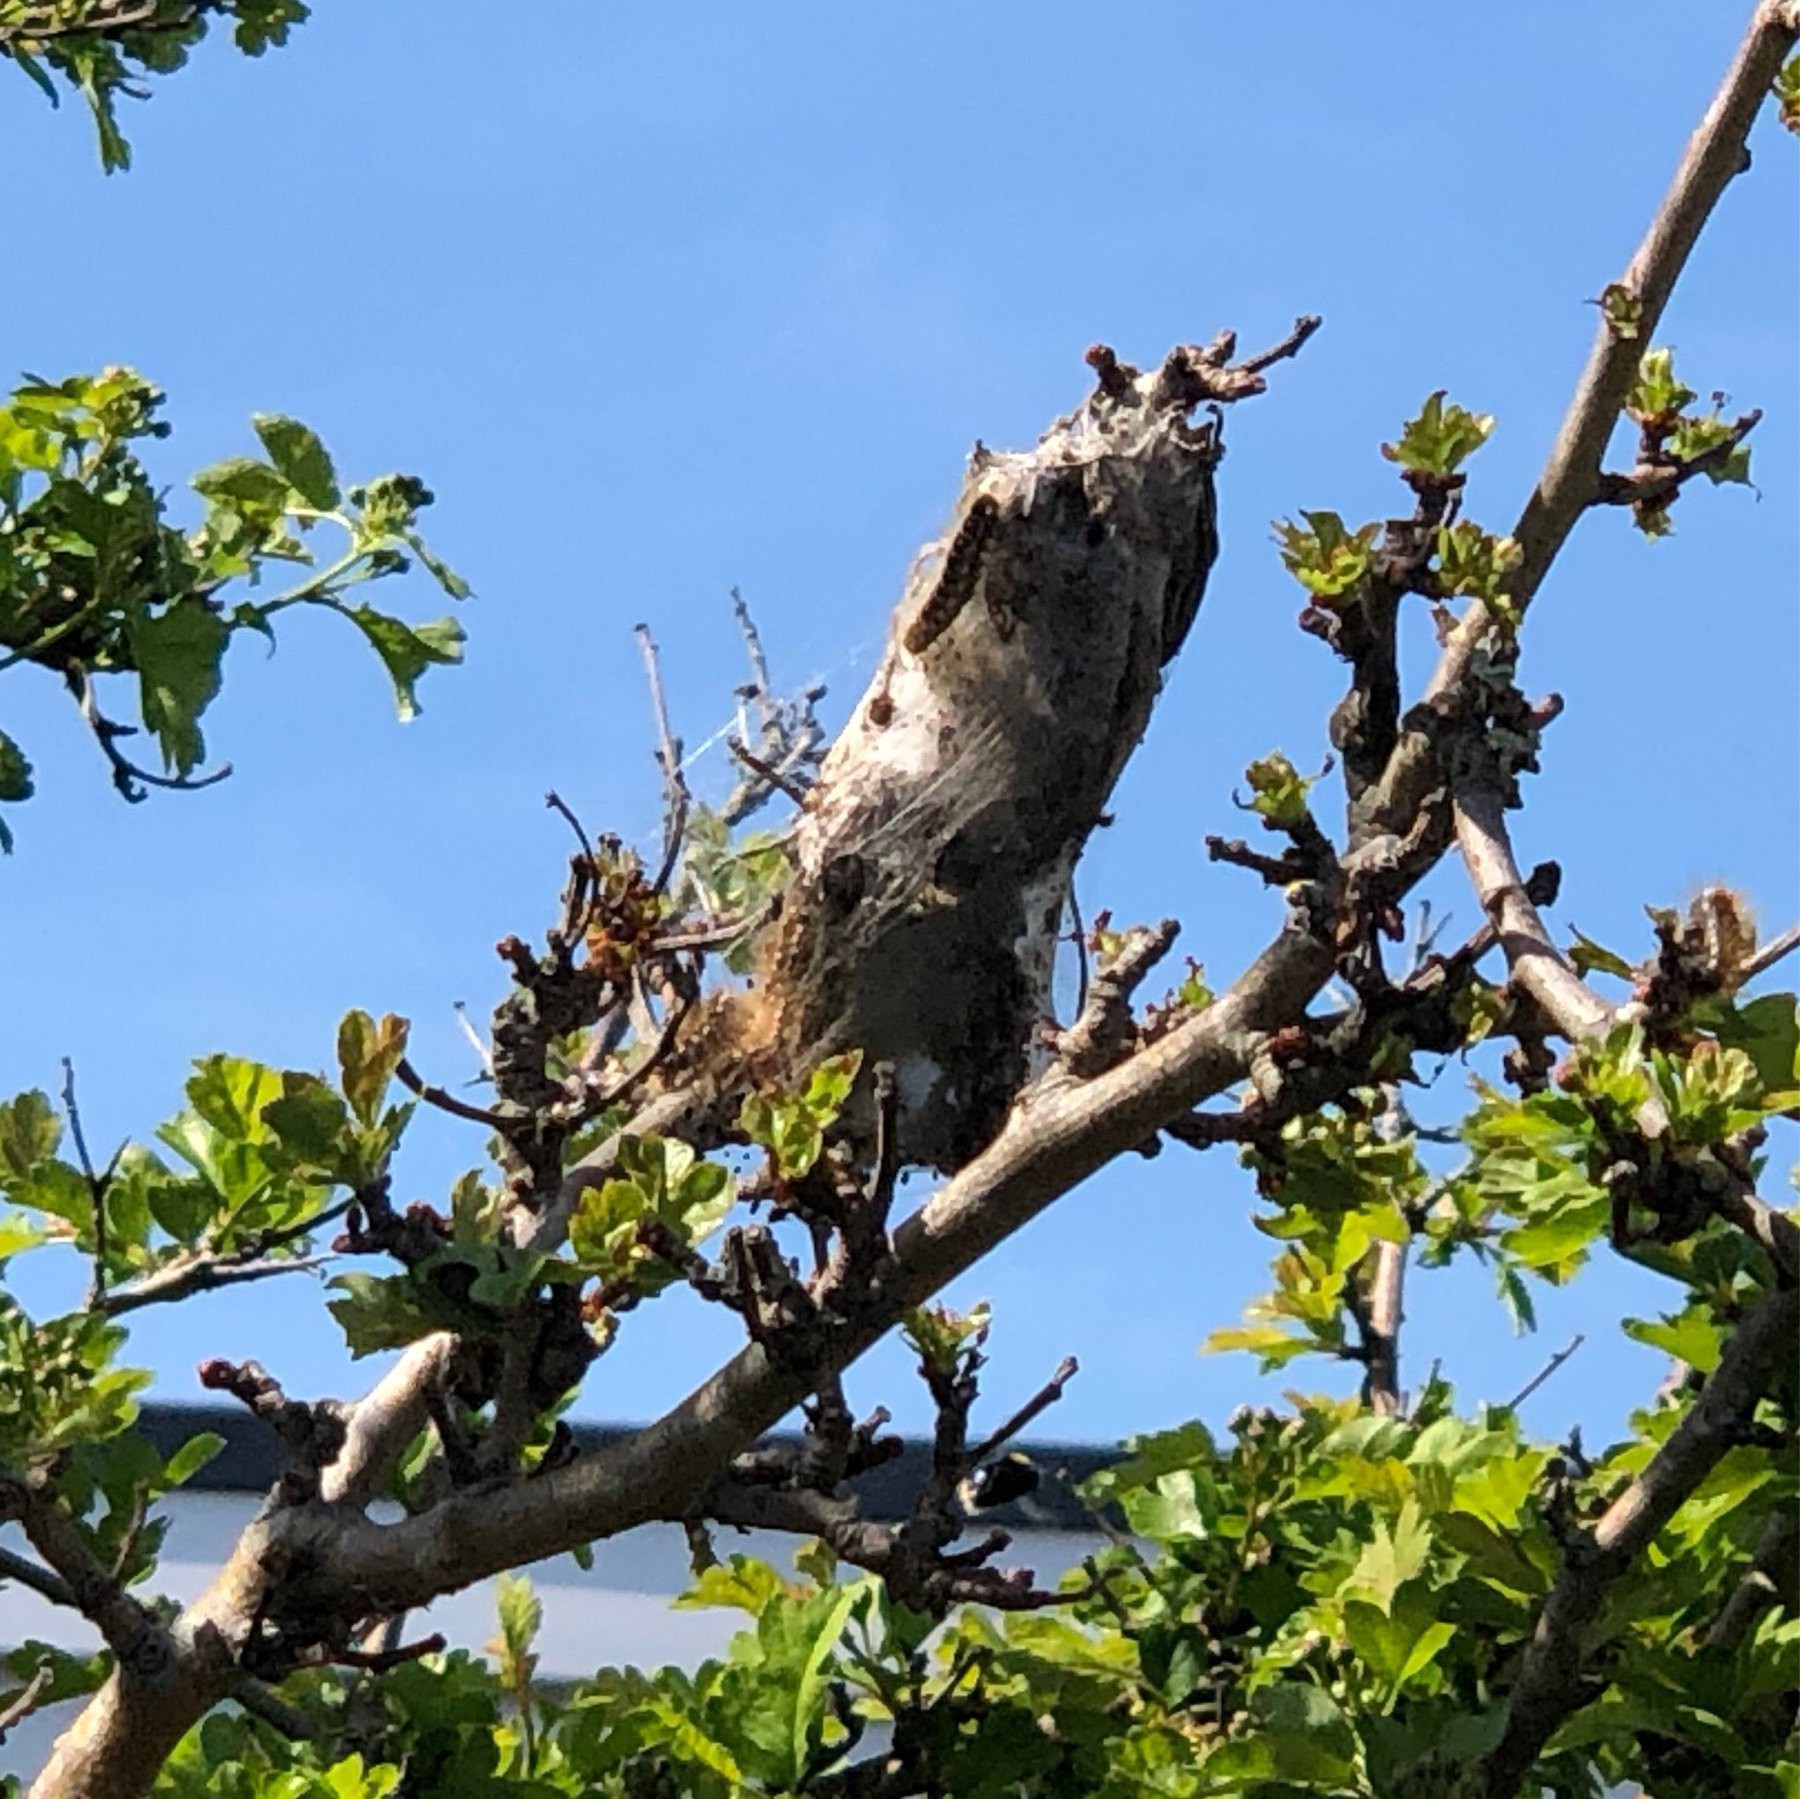 A caterpiller nest in a tree in the garden of Shoreham Beach Primary School.